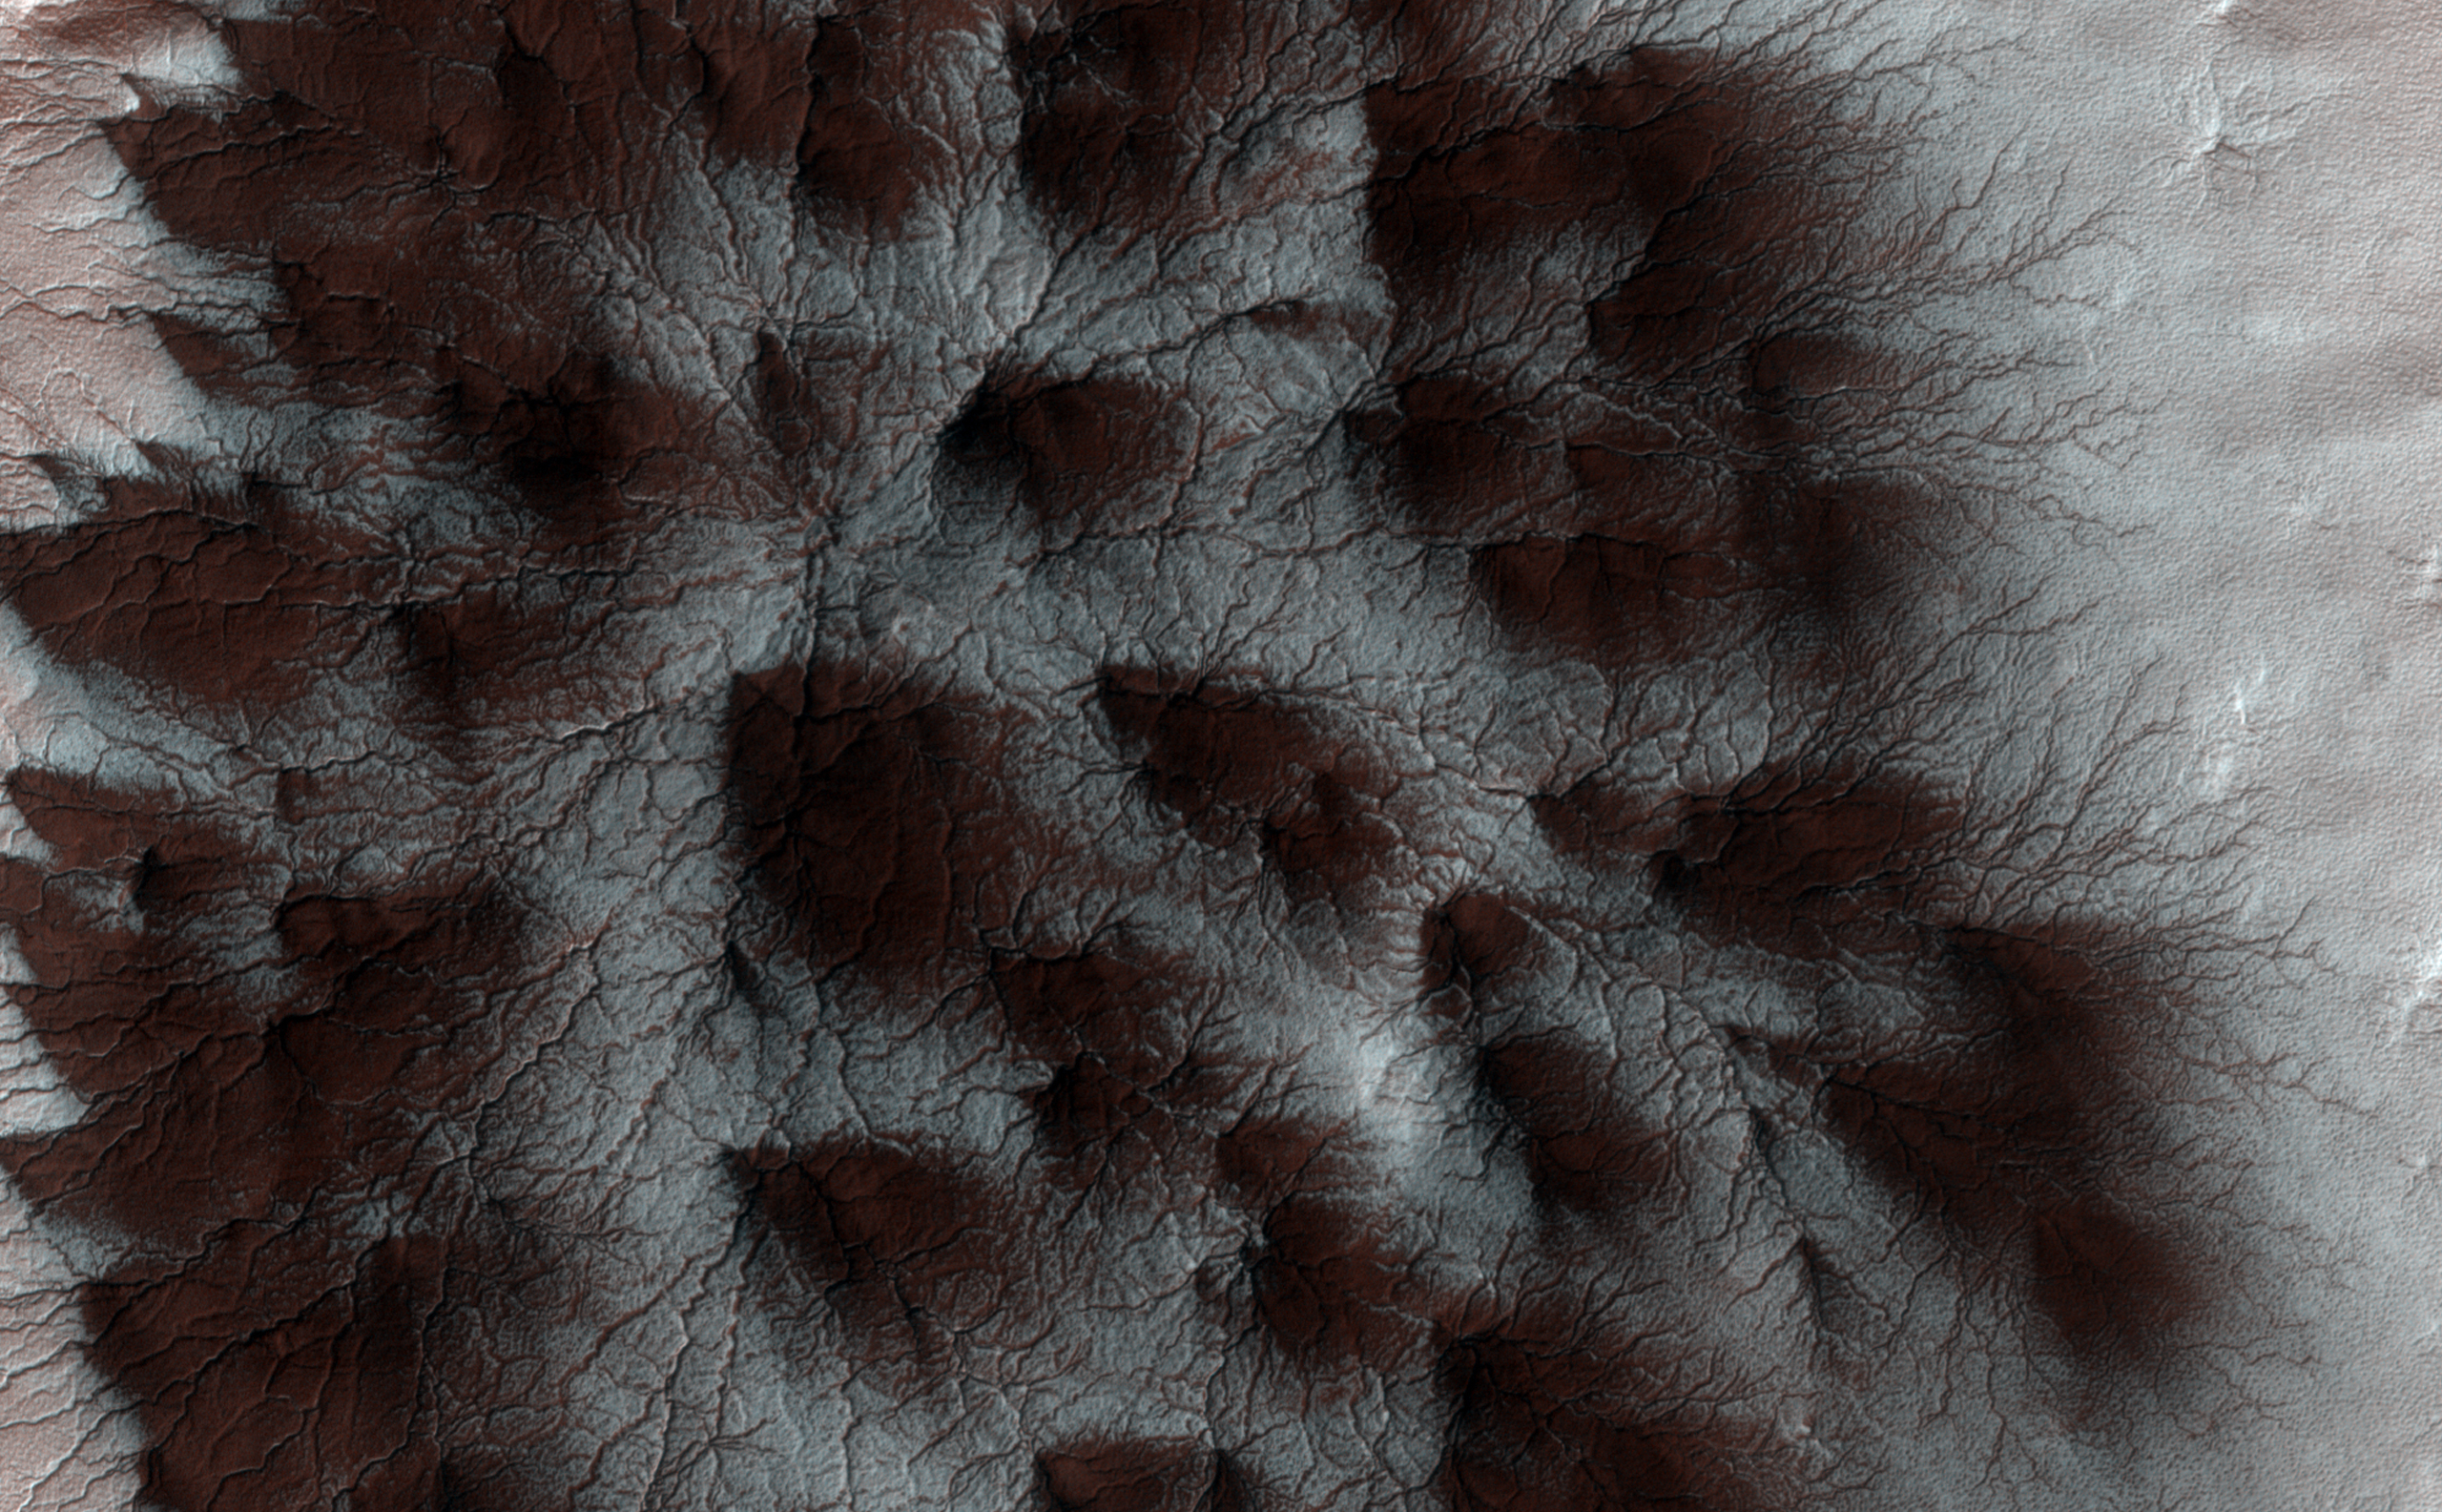 Image taken by the Mars Reconnaissance Orbiter